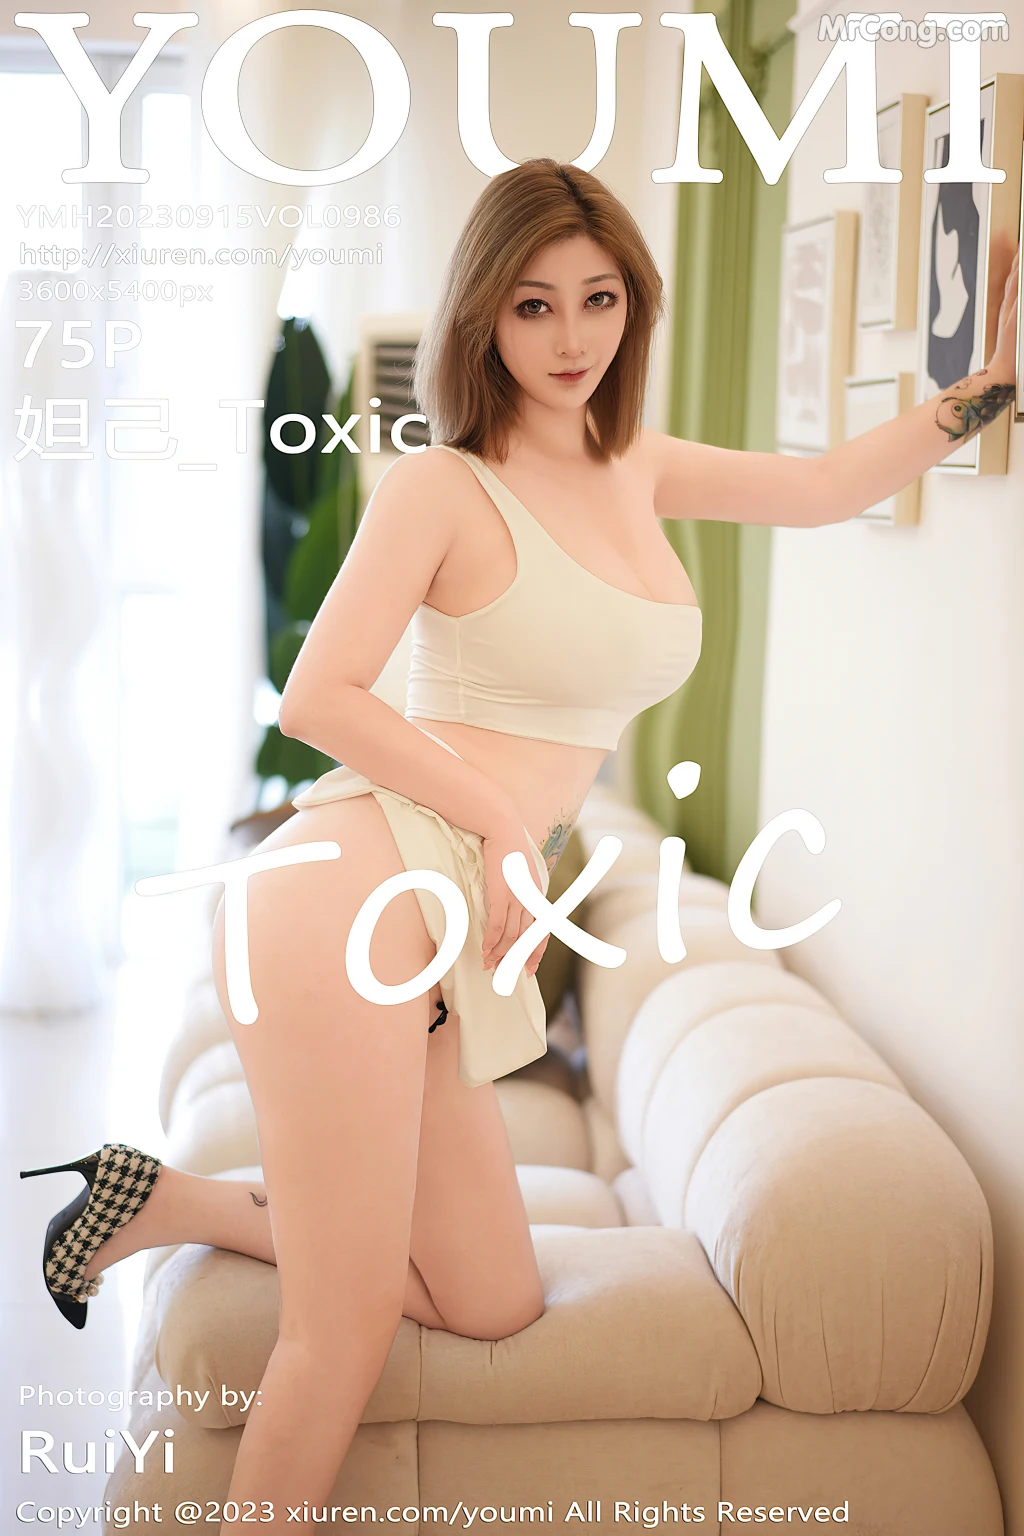 YouMi Vol.986: Daji_Toxic (妲己_Toxic) (76 photos)